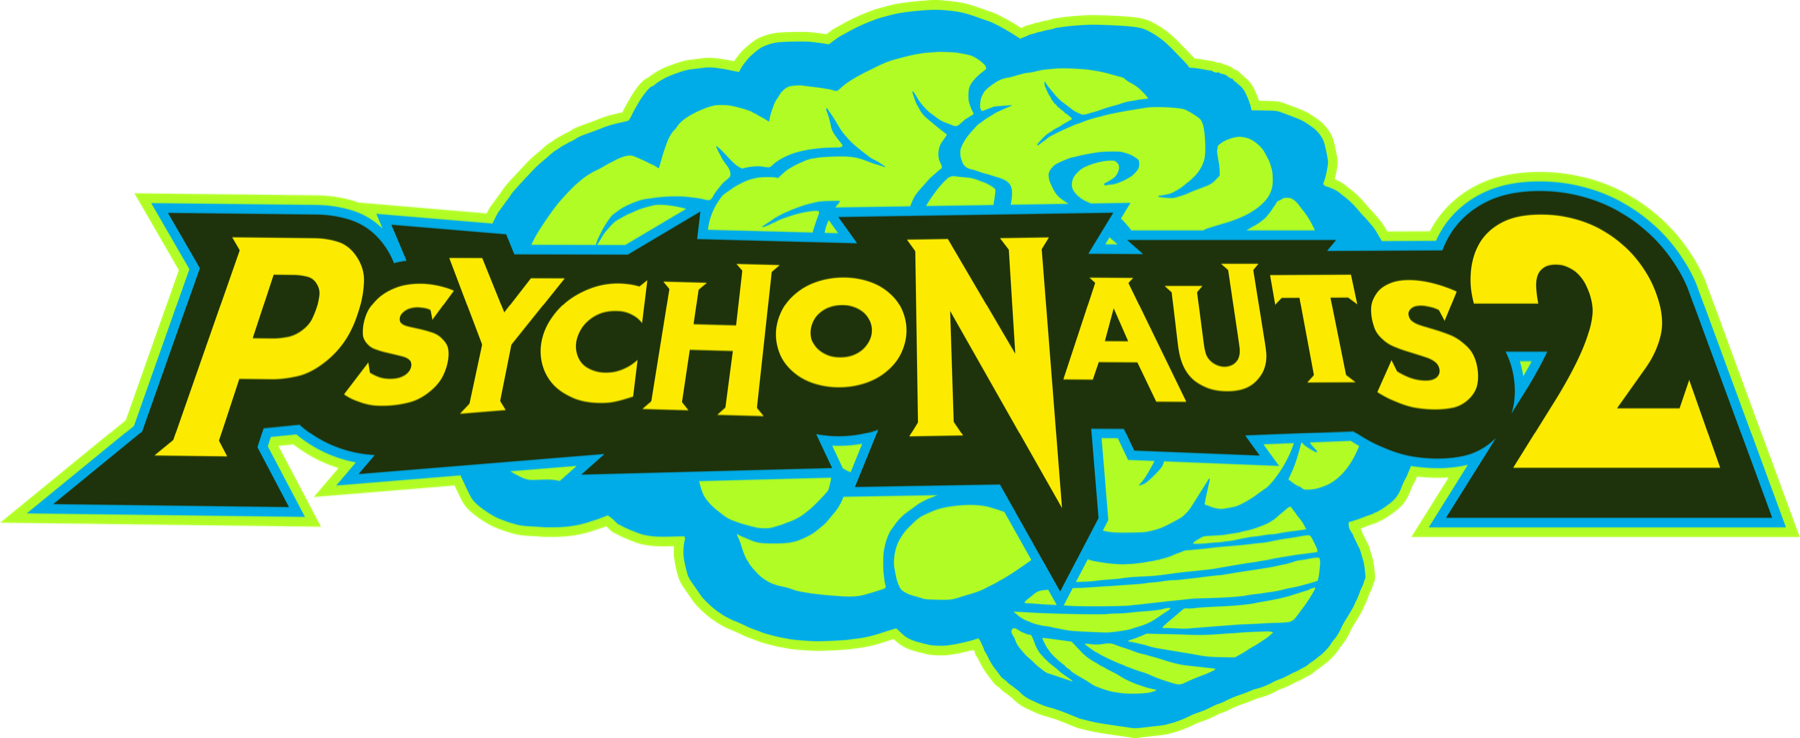 Psychonauts-2-Logo-Color.png